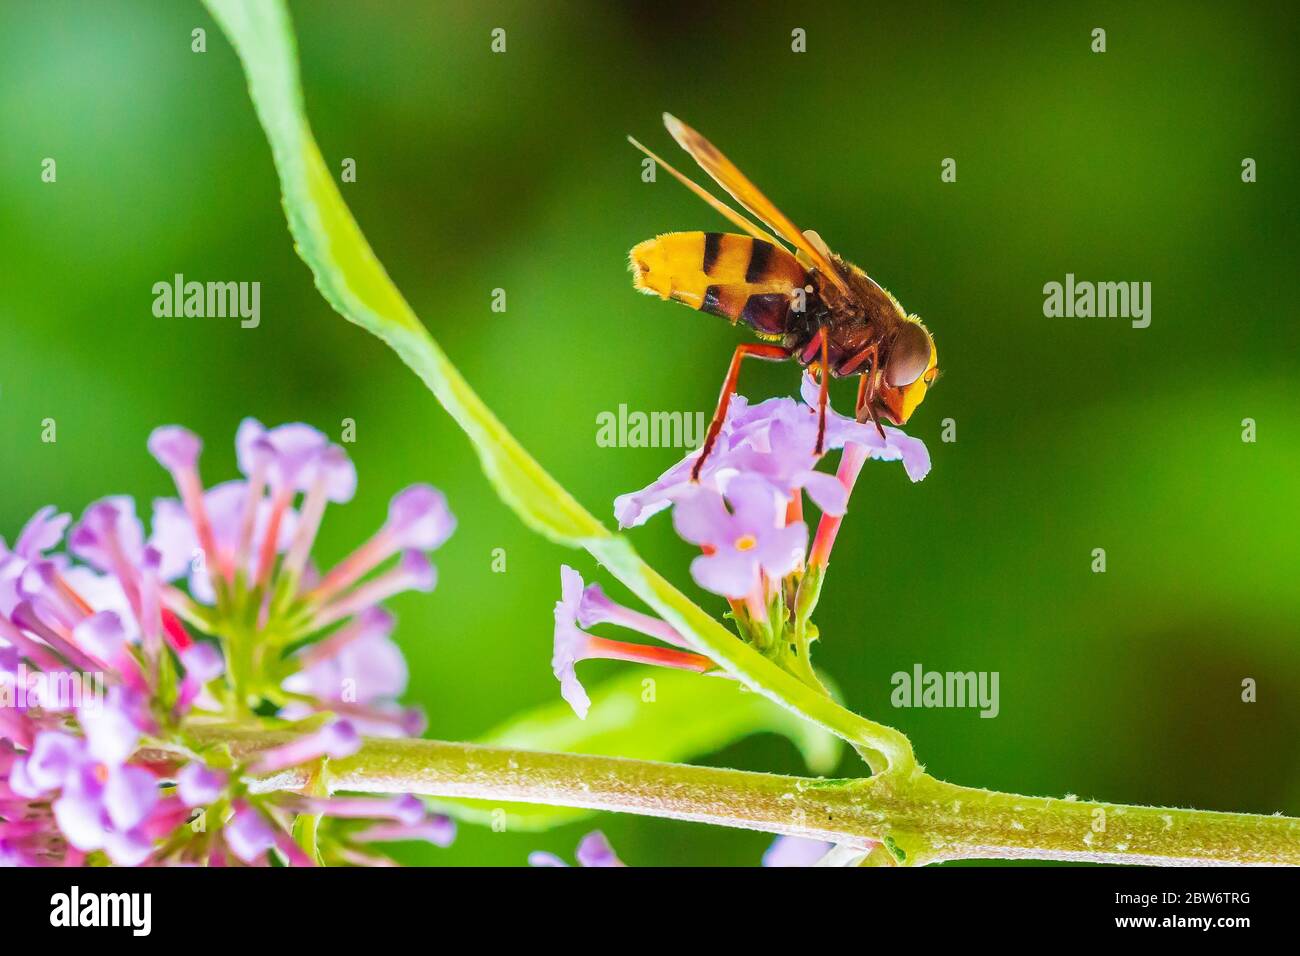 Volucella zonaria, the hornet mimic hoverfly, feeding nectar on purple Buddleja davidii flowers Stock Photo